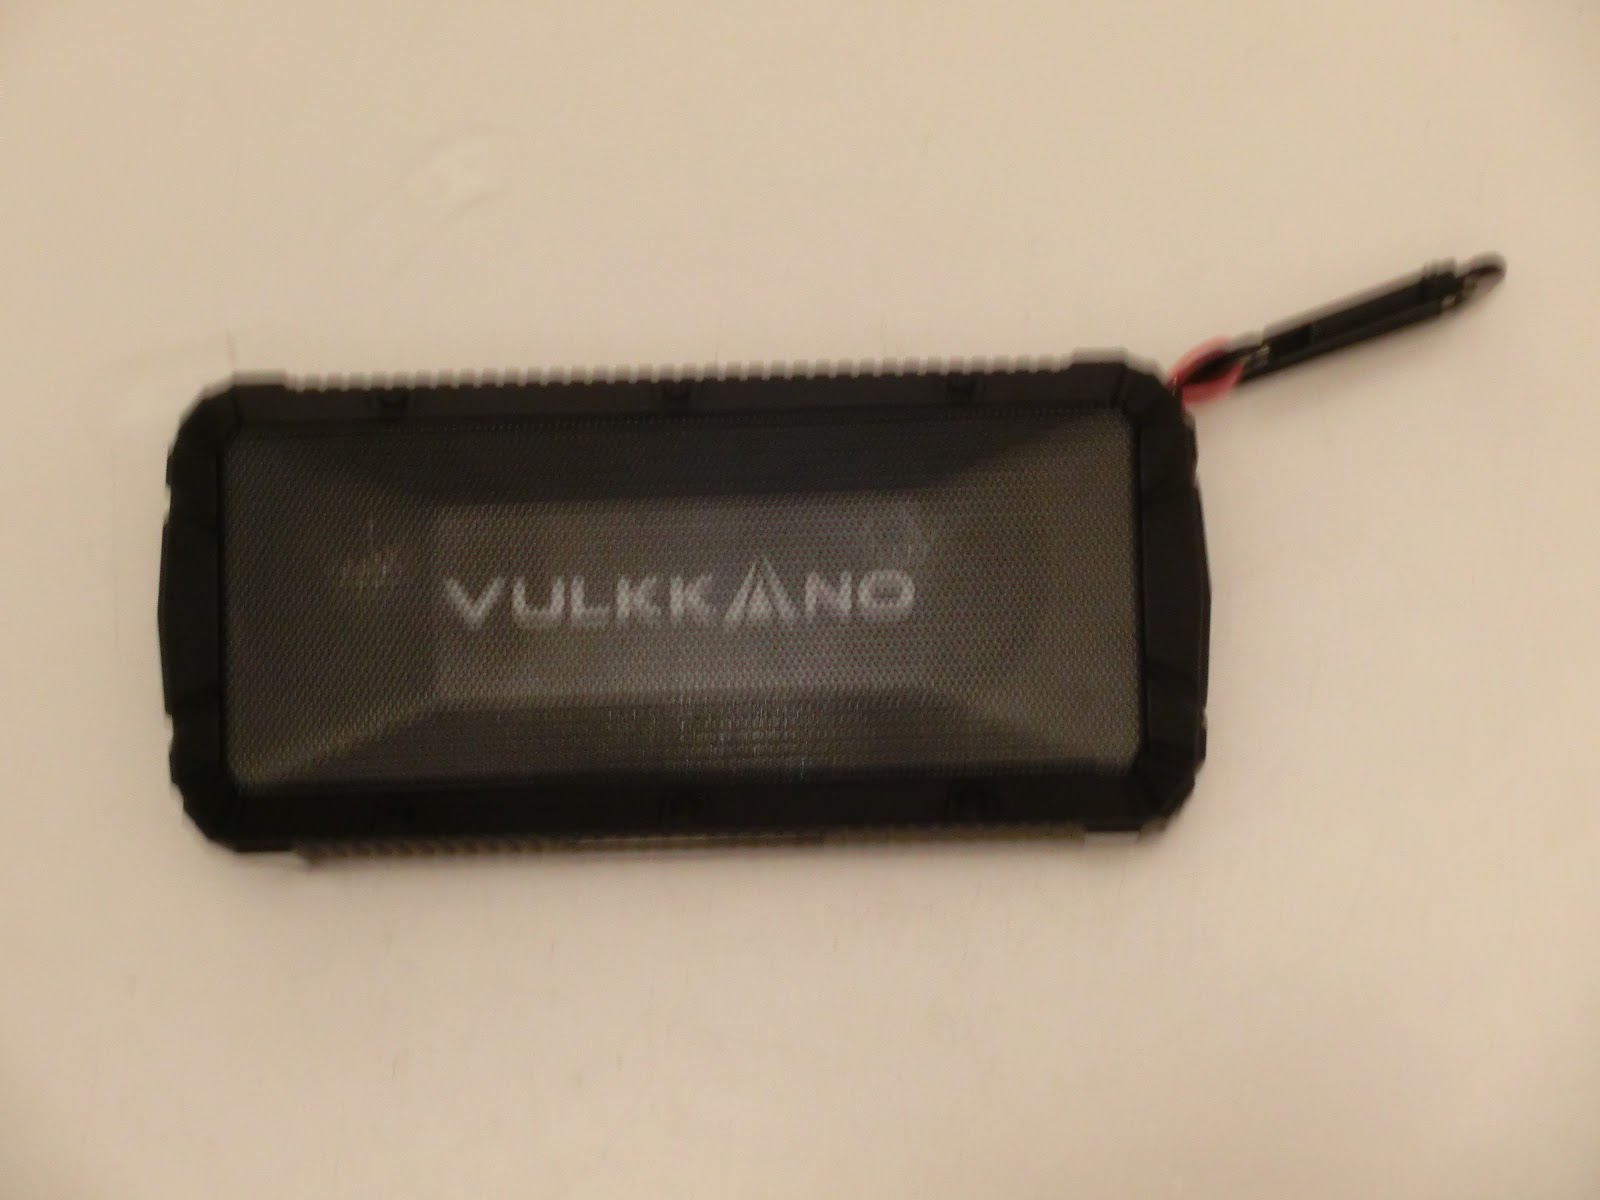 [REVIEW] Vulkkano Bullet (Altavoz Bluetooth, FM, MicroSD, IPX6)